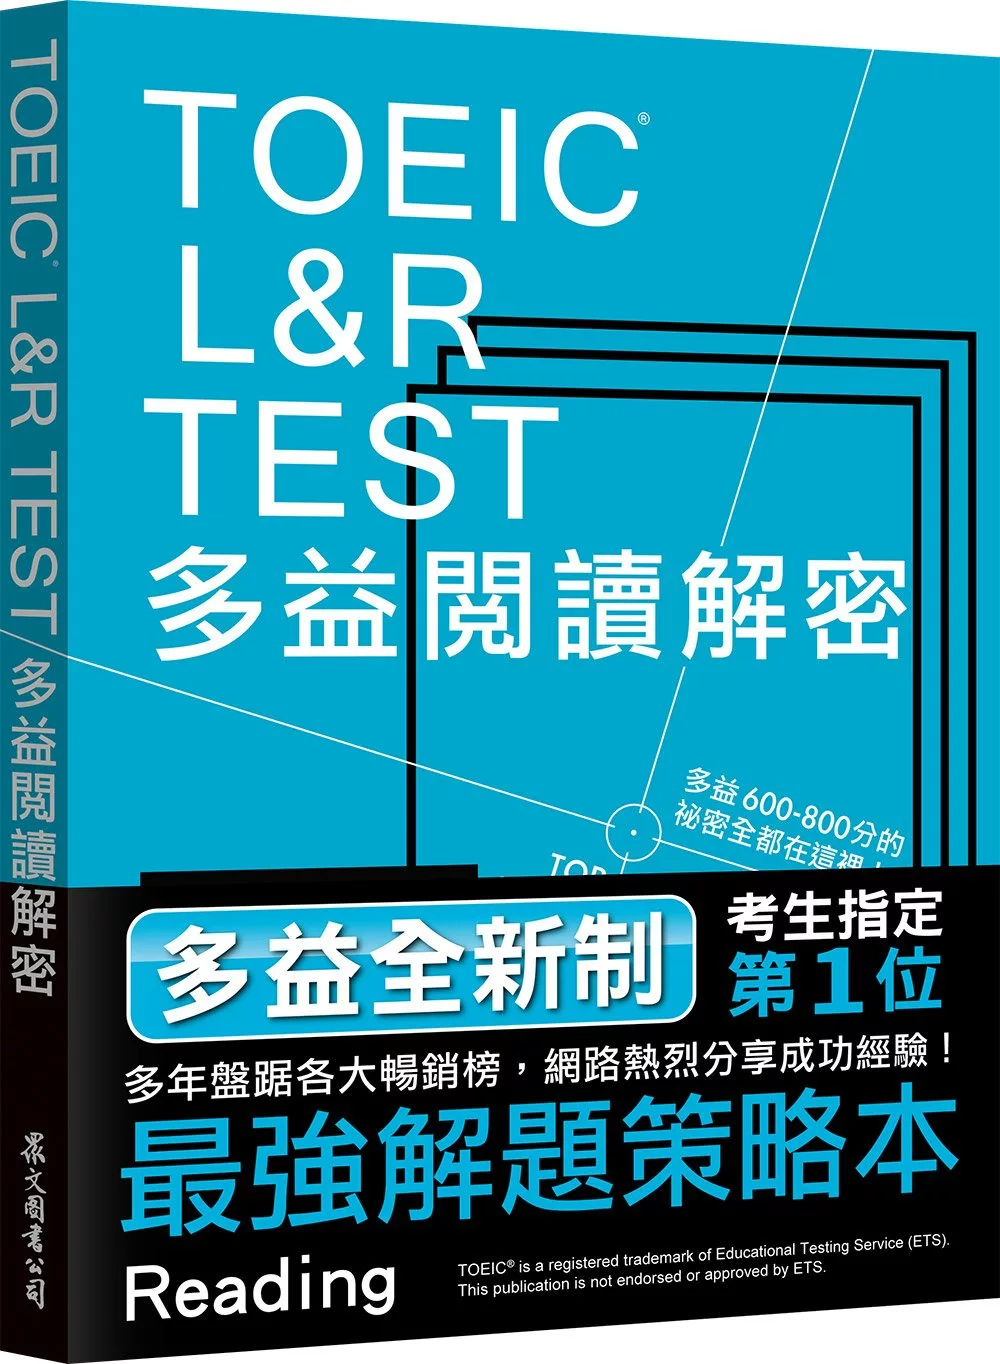 TOEIC L&R TEST多益閱讀解密[全新制]